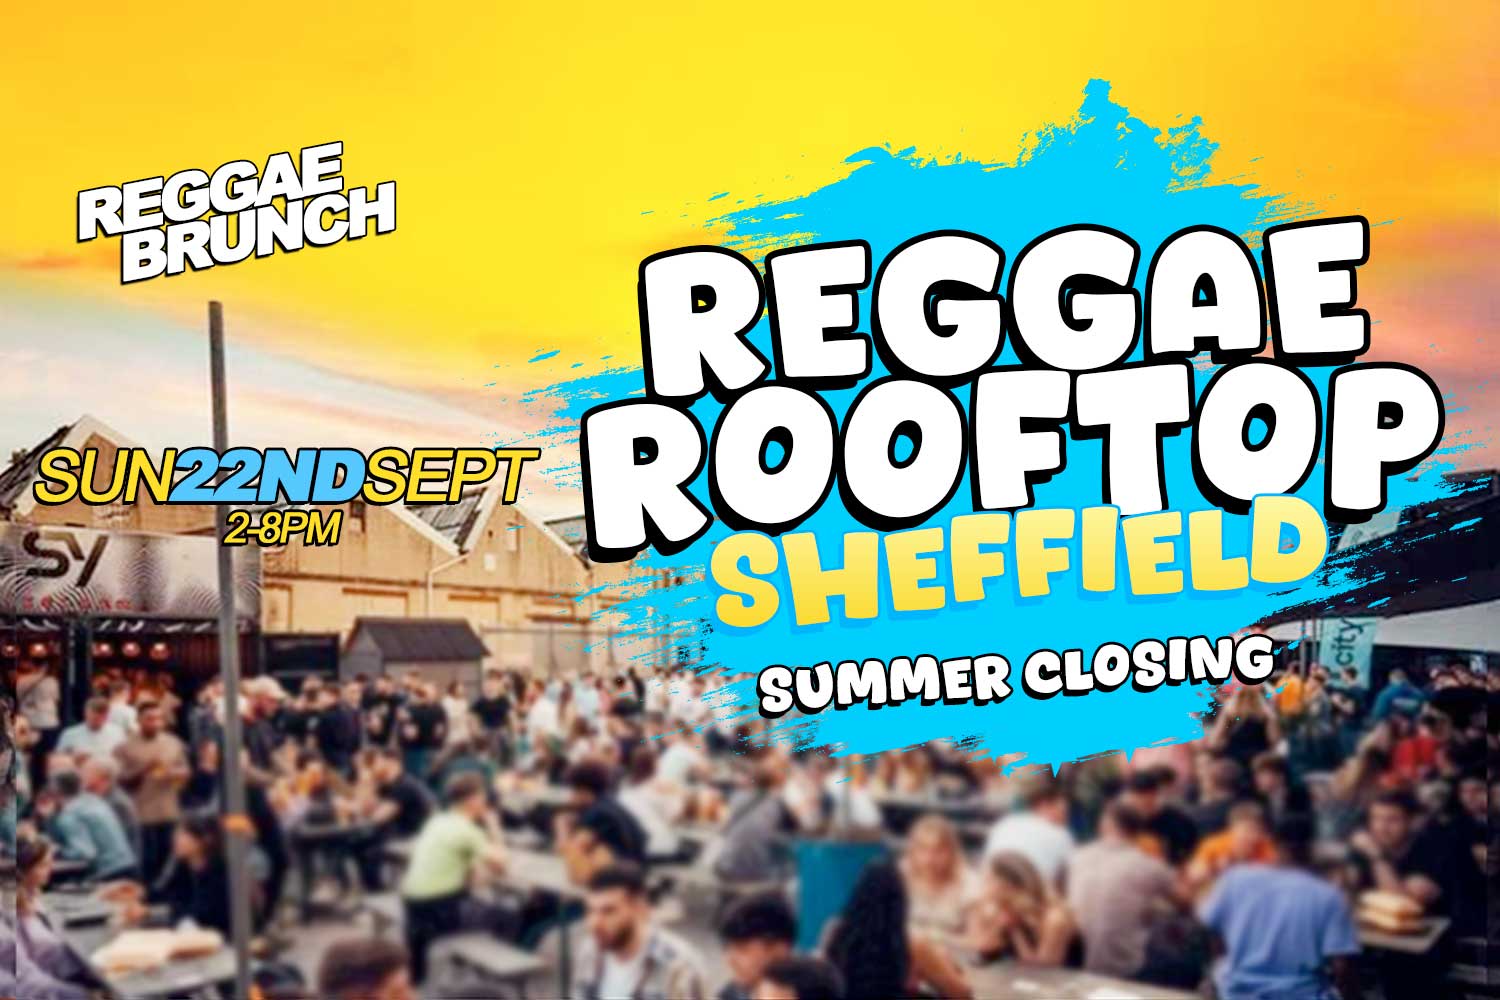 Sun, 22nd Sept | Reggae Rooftop Sheffield